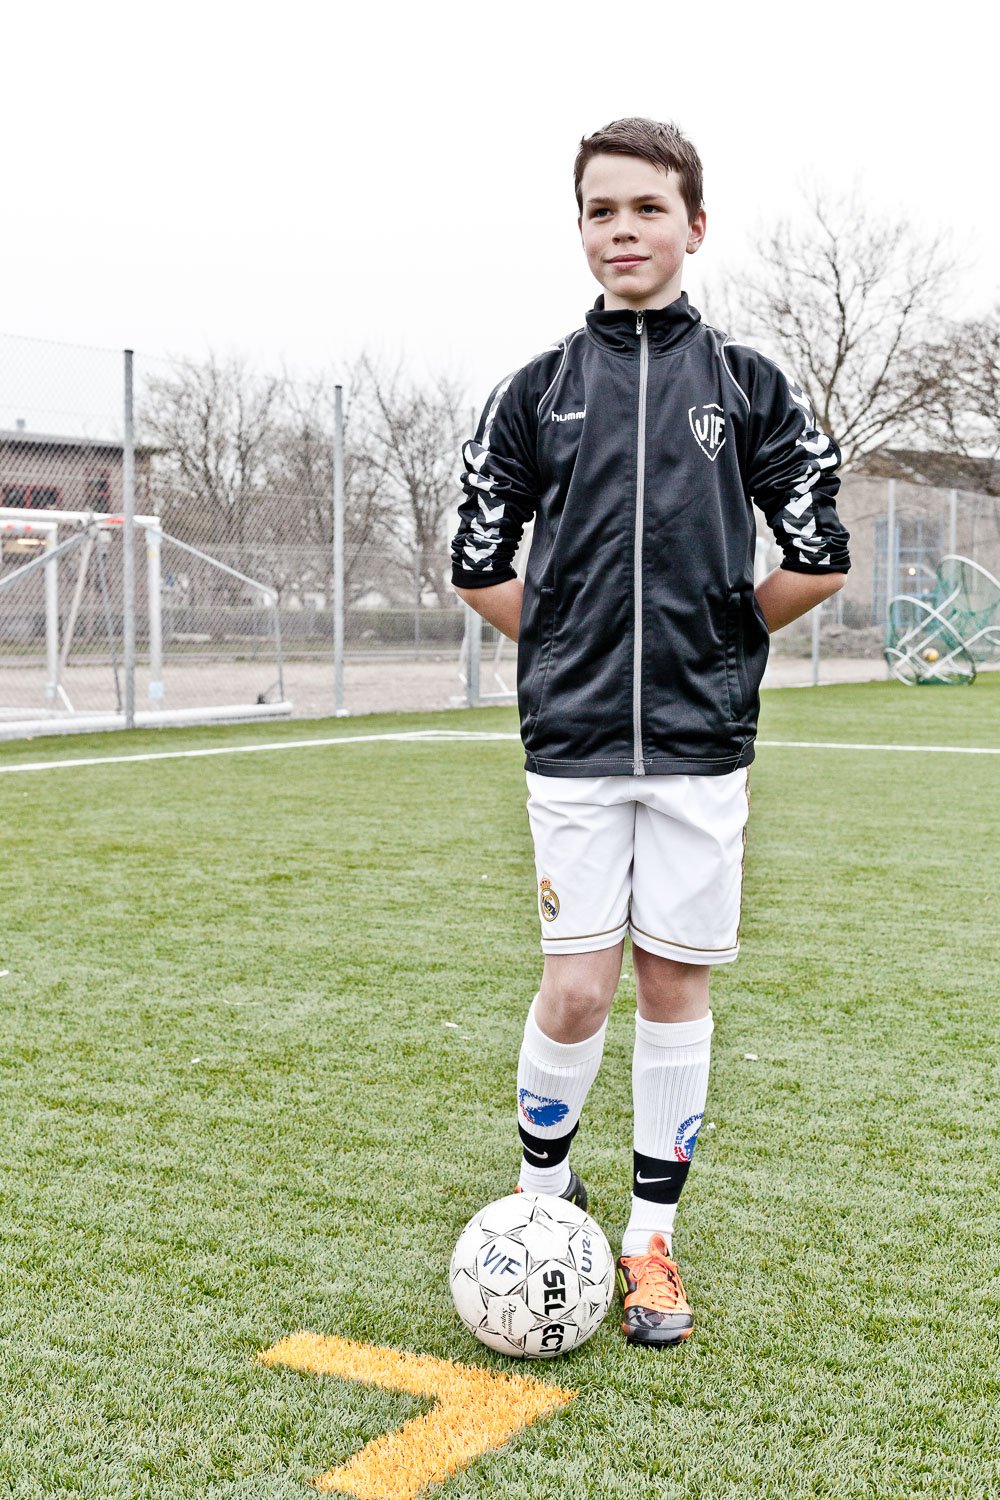  NAME: Jonathan Paag AGE: 12 CLUB: Vanløse IF POSITION: Right Midfield HOMETOWN: Vanløse, Denmark 